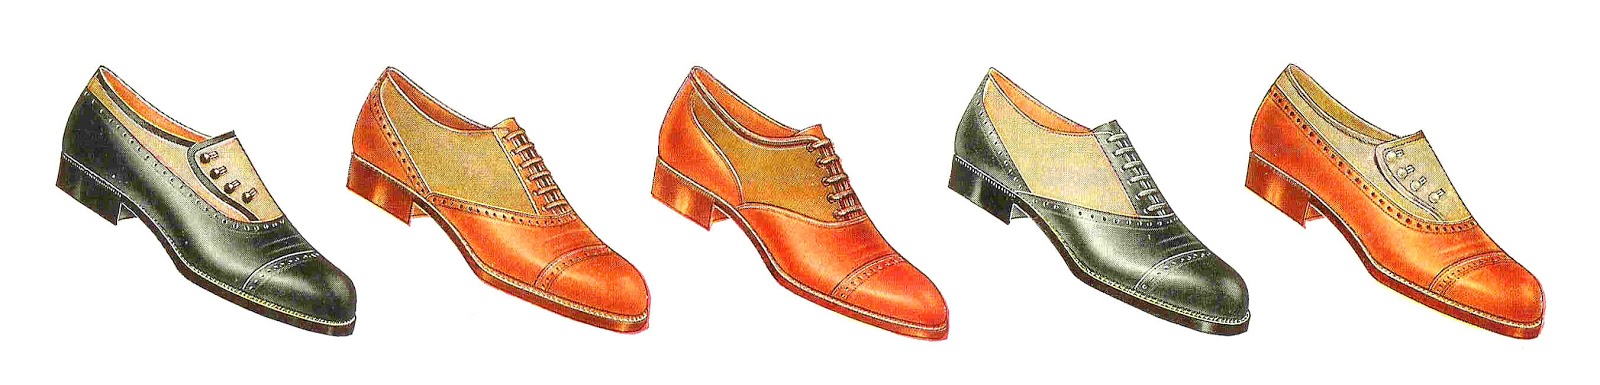 Free Vintage Shoe Clip Art  Border Of Vintage 1917 Men S Dress Shoes